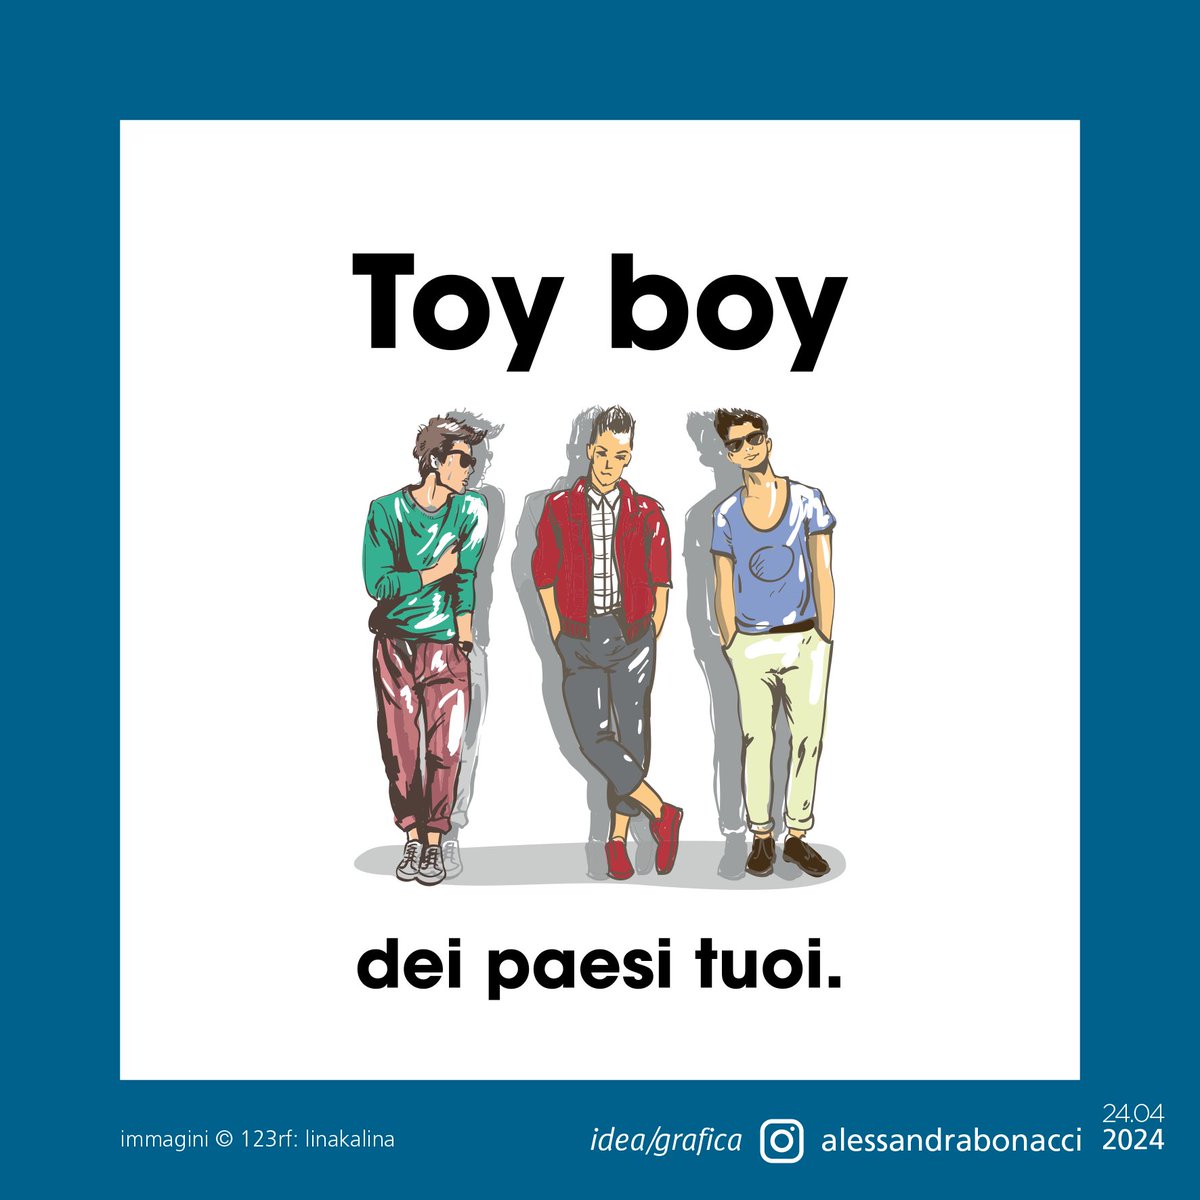 Vecchi proverbi riveduti e corretti.

Idea/grafica: Toy boy dei paesi tuoi.

-- 

#MogliEBuoiDeiPaesiTuoi #ToyBoy #Collage #Patchwork #GiochiDiParole #Calembour #Puns #JustForFun #Humor #Joking

(immagini © 123rf: linakalina)